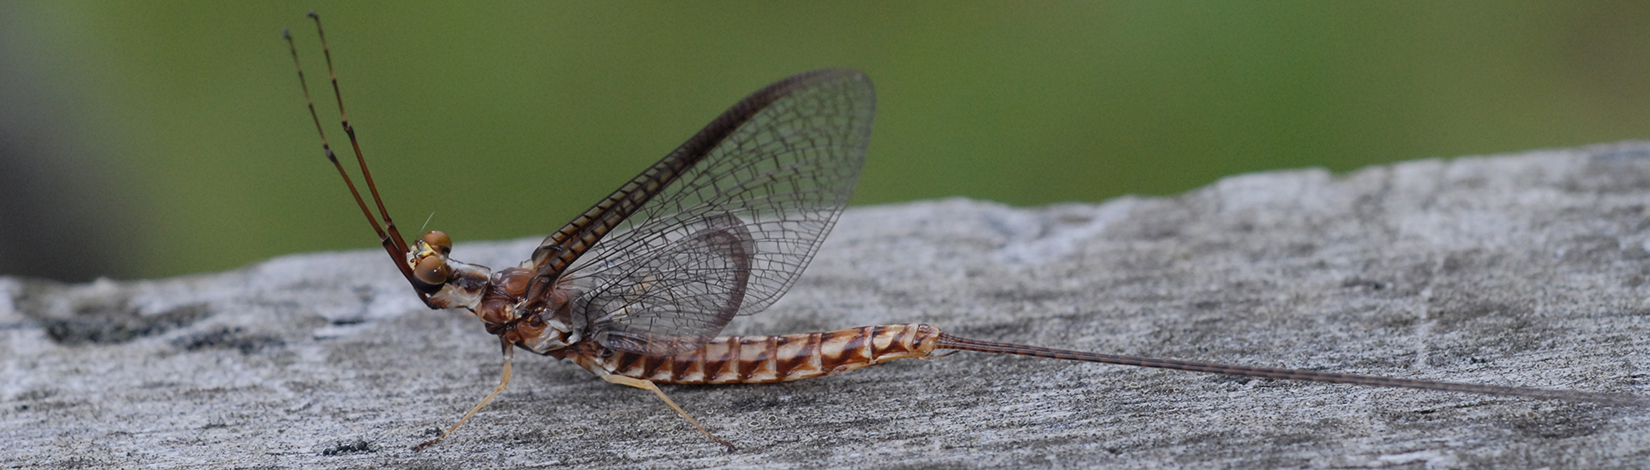 a photo of a mayfly taken by Lyle Buss